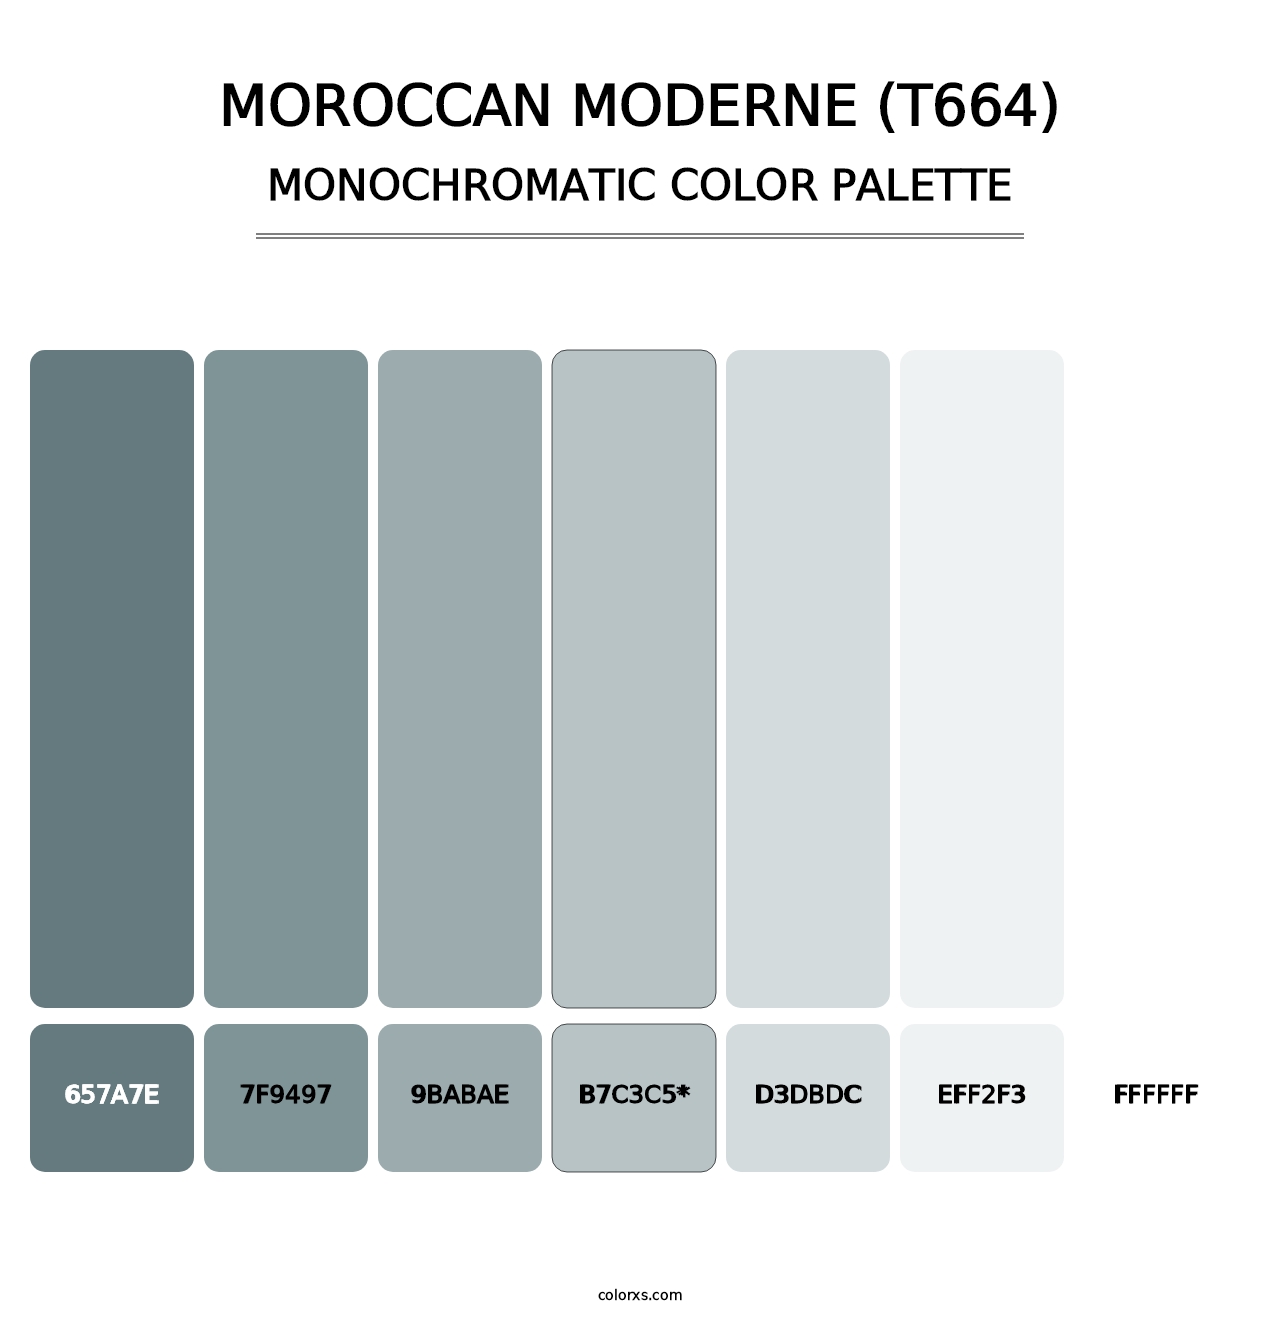 Moroccan Moderne (T664) - Monochromatic Color Palette